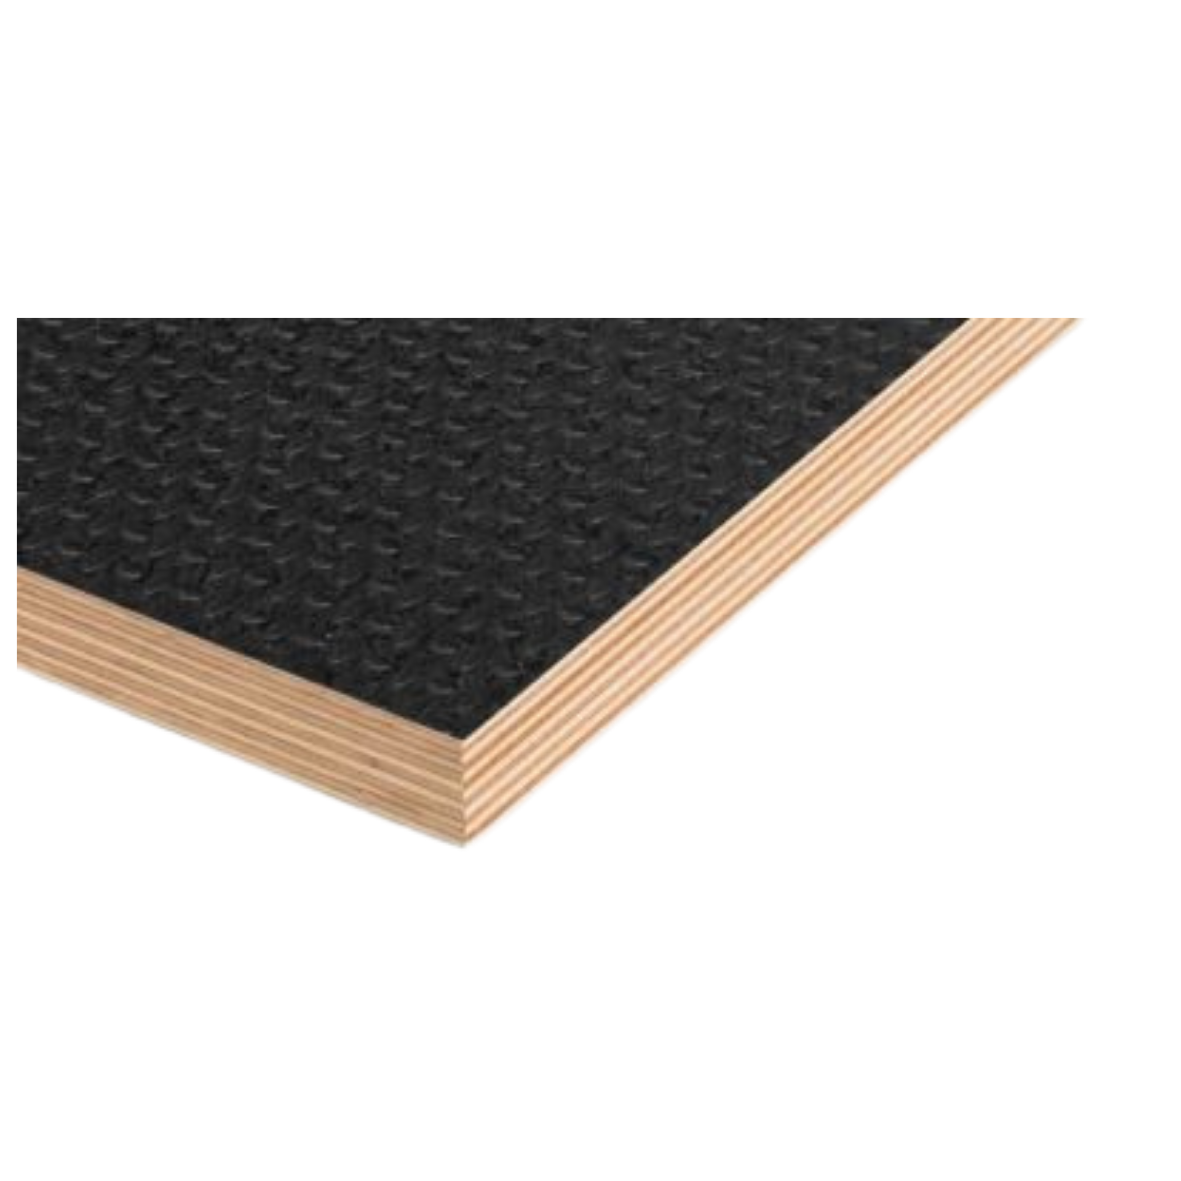 Antiskid playwood - Anti-slip TEGO formwork plywood 12 mm thickness, 1250 x 2500 mm class A, https:maxbau.ro